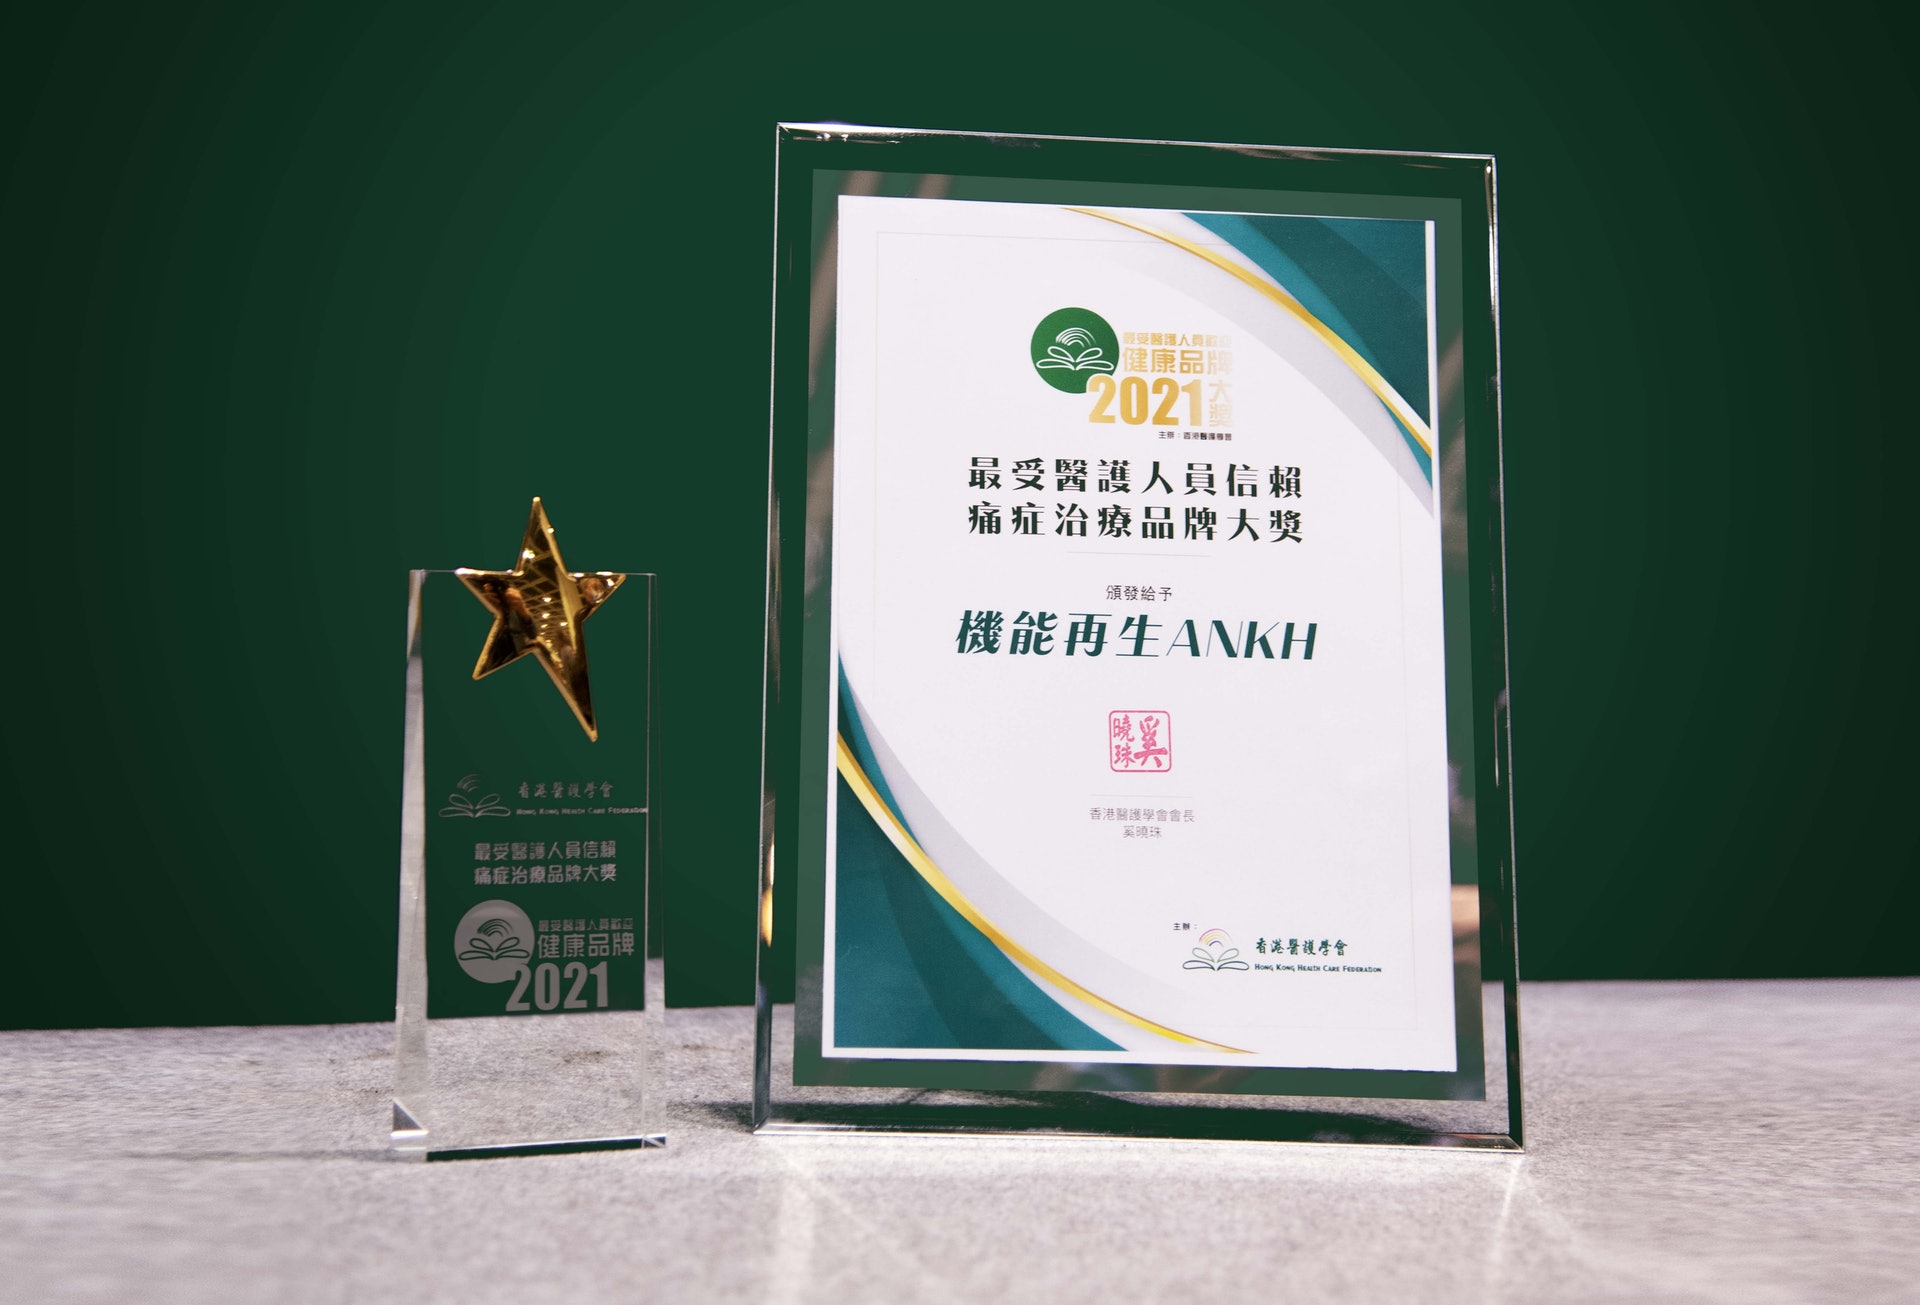 ANKH機能再生-痛症健康集團是香港第一間獲得由香港醫護學會及西醫工會會董頒發「最受醫護人員信賴 痛症治療品牌大獎」的企業，是痛症治療範疇可靠之選。（圖片：受訪者提供）